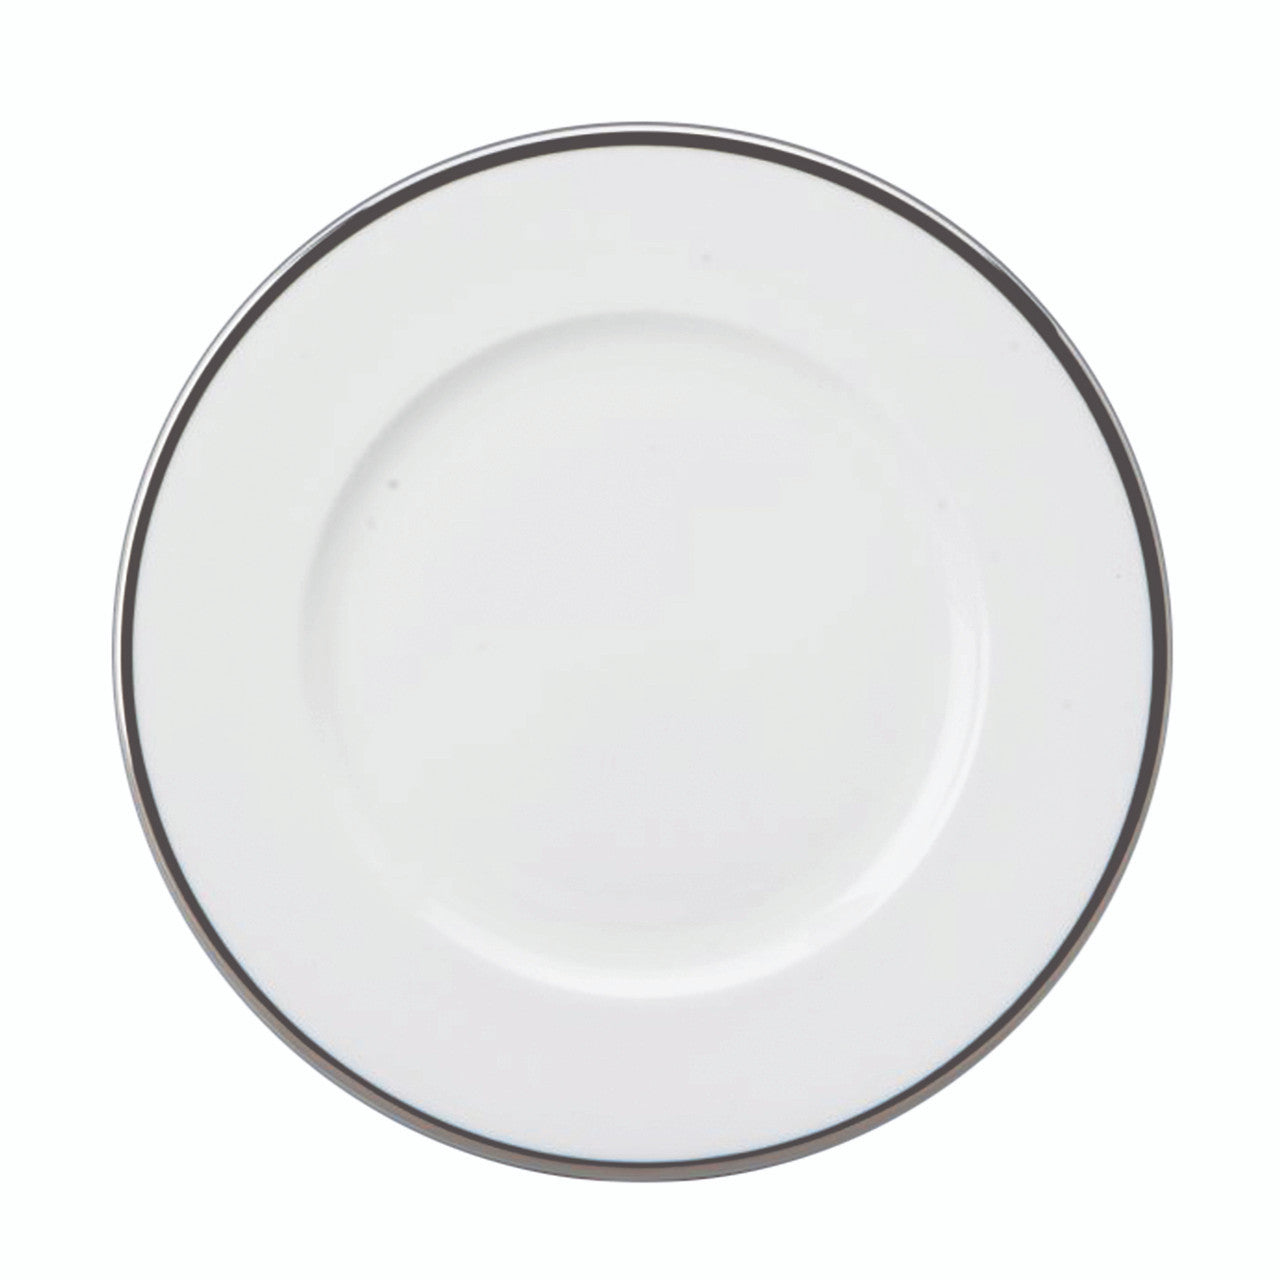 Prouna Comet Dinner Plate